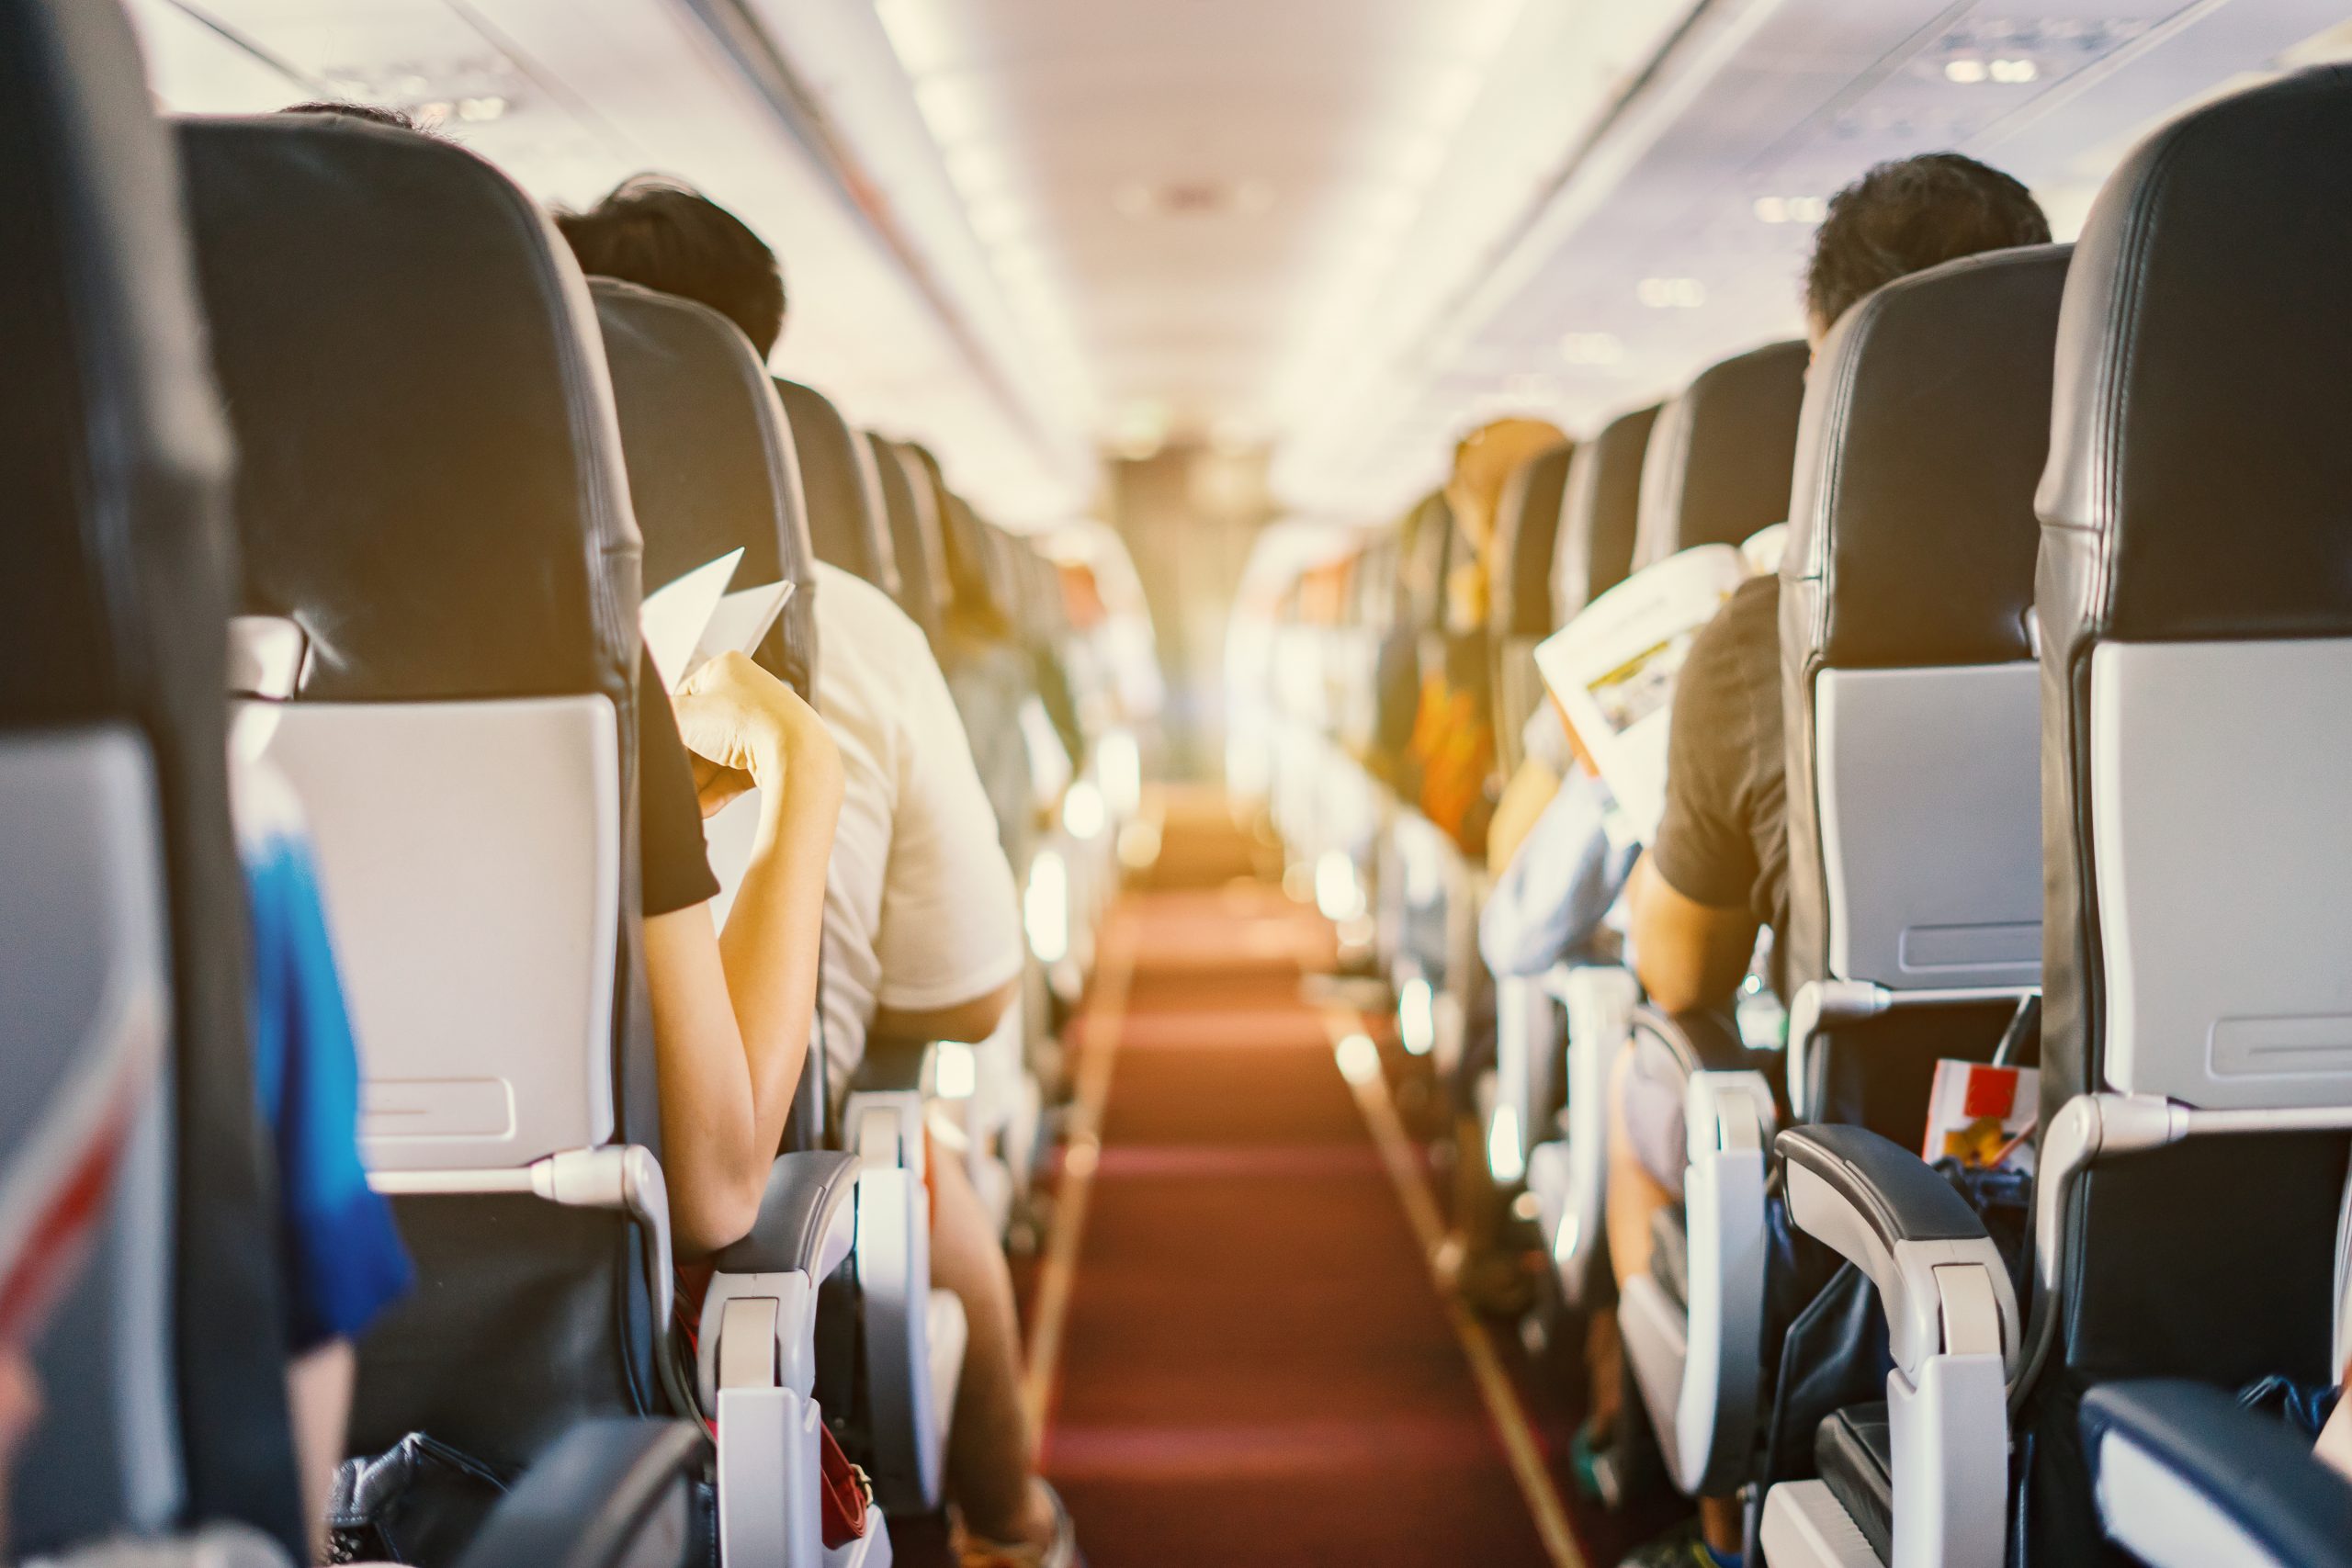 Interior of airplane with passengers sitting